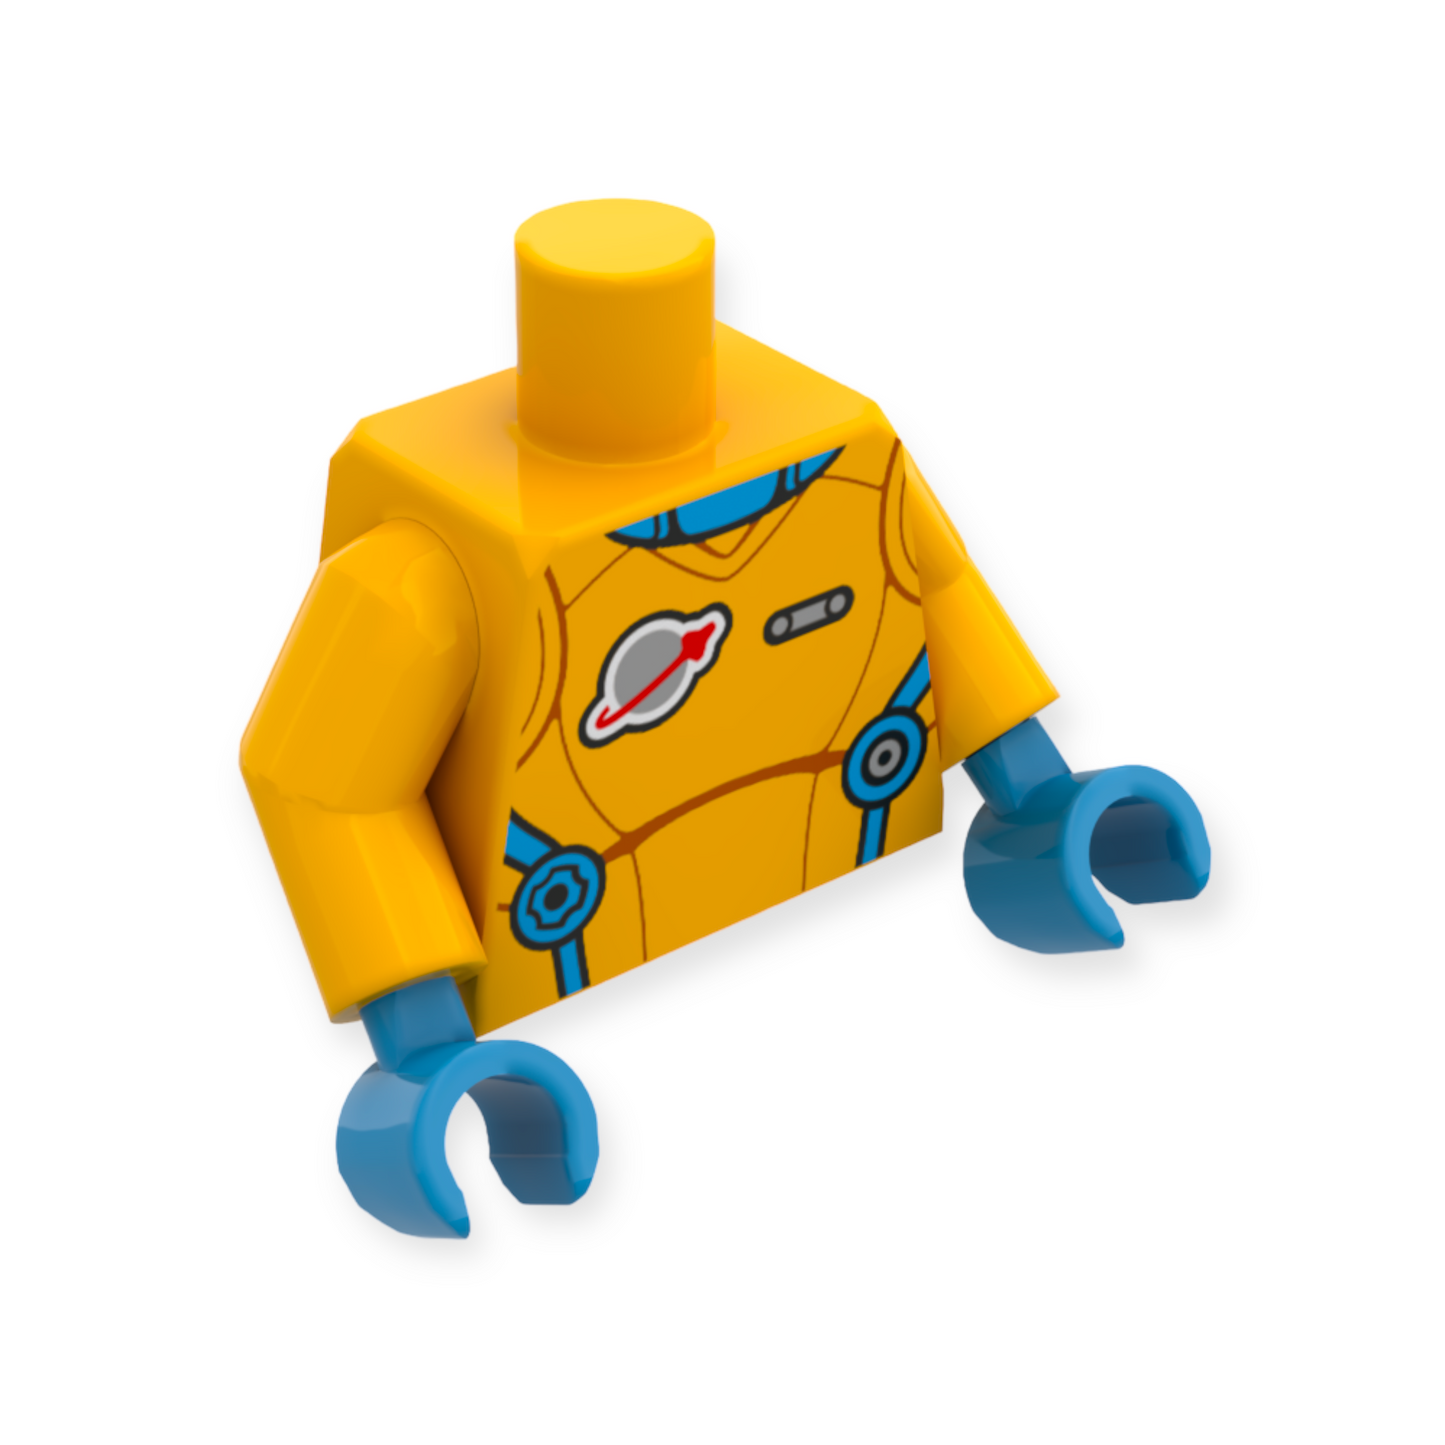 LEGO Torso - 5974 Spacesuit, Dark Azure Neck and Straps, Classic Space Logo